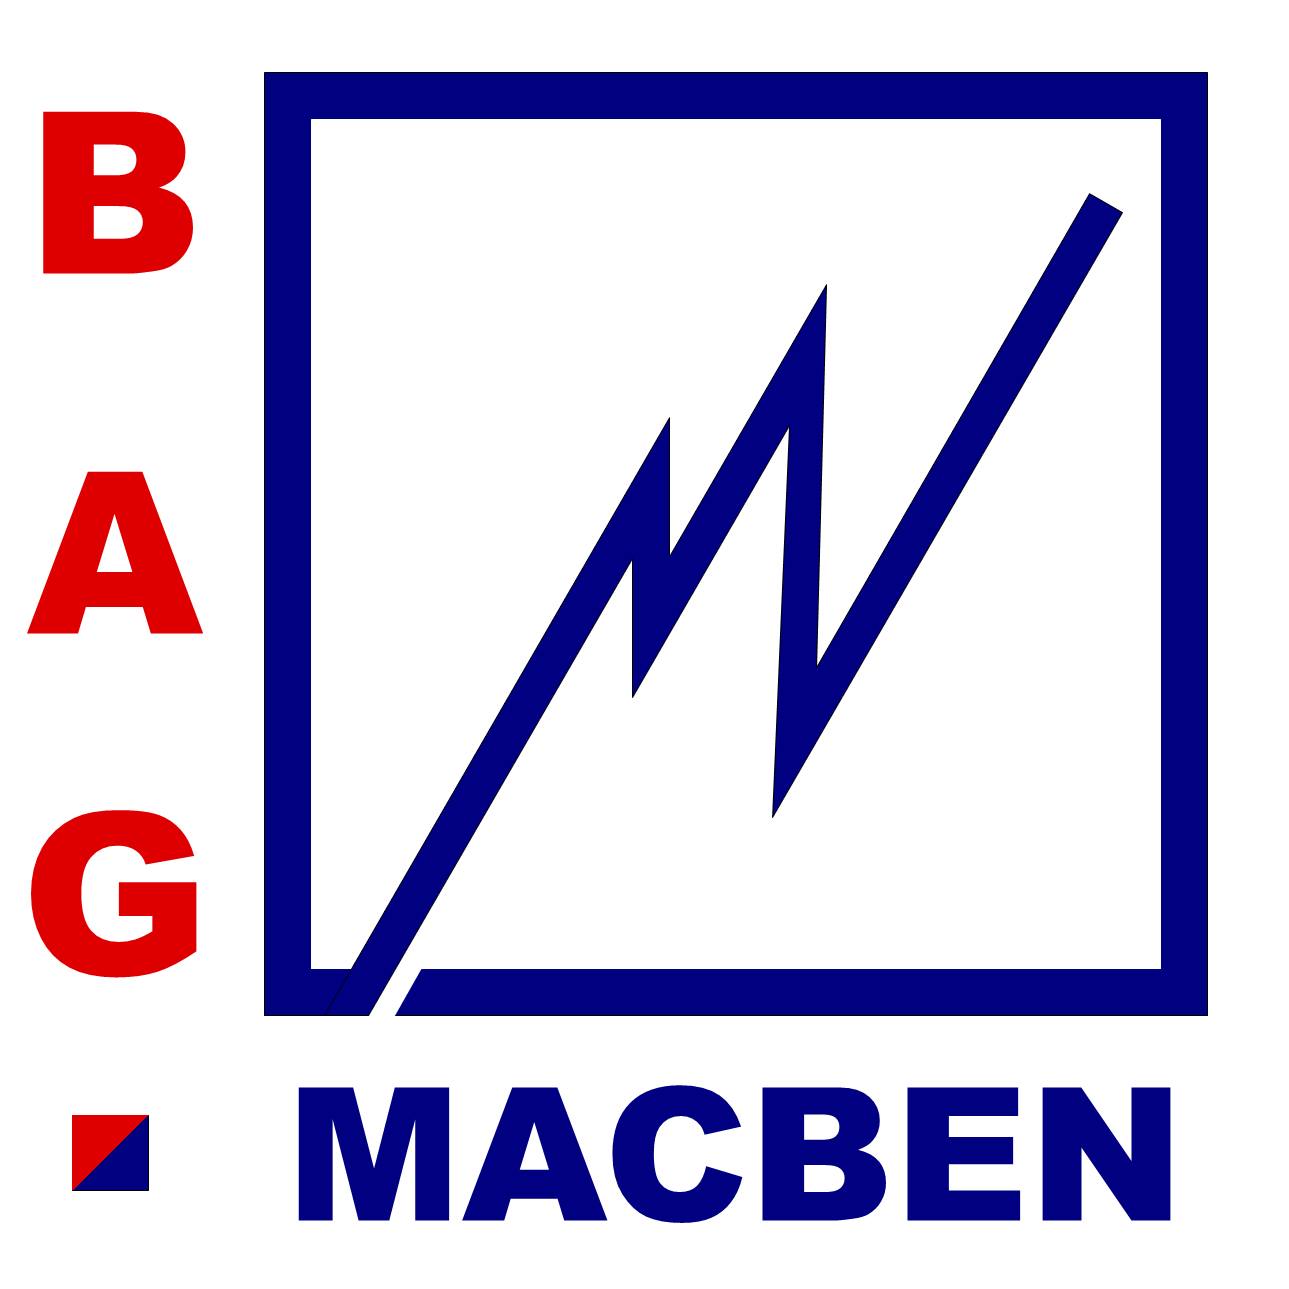 BAG-Macben bv